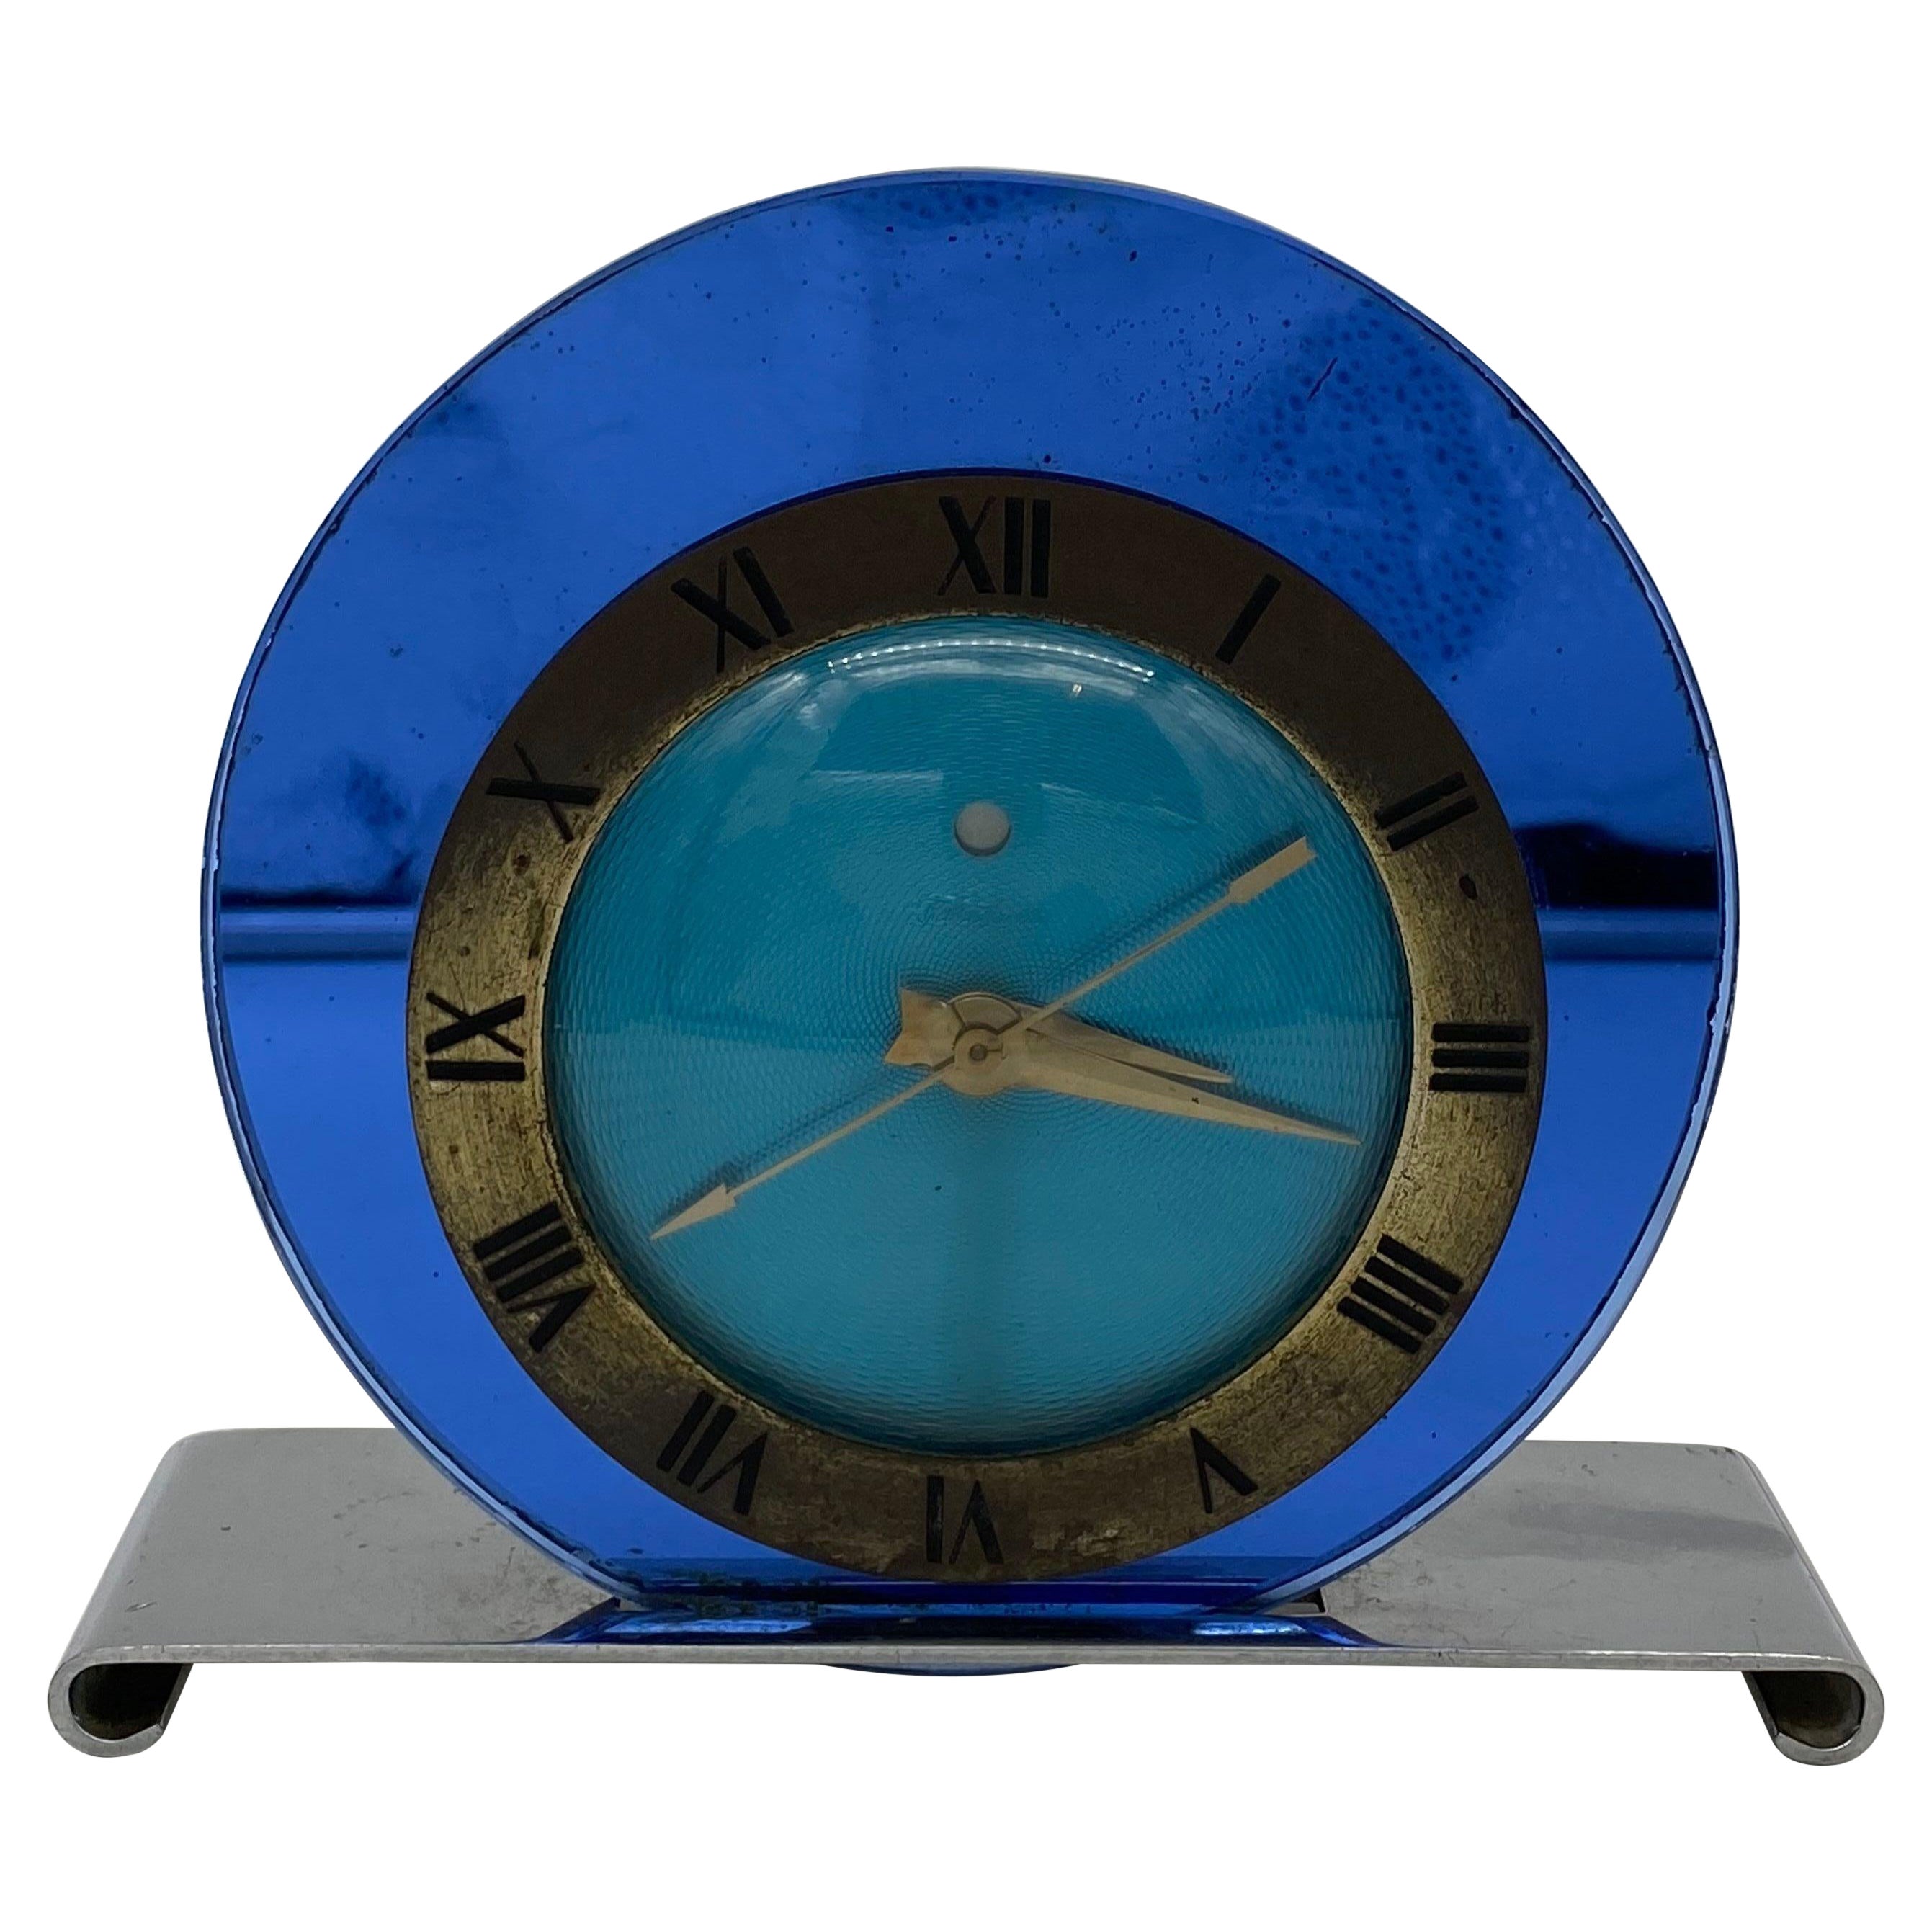 1935 Telechron Art Deco Electric Clock with Blue Glass